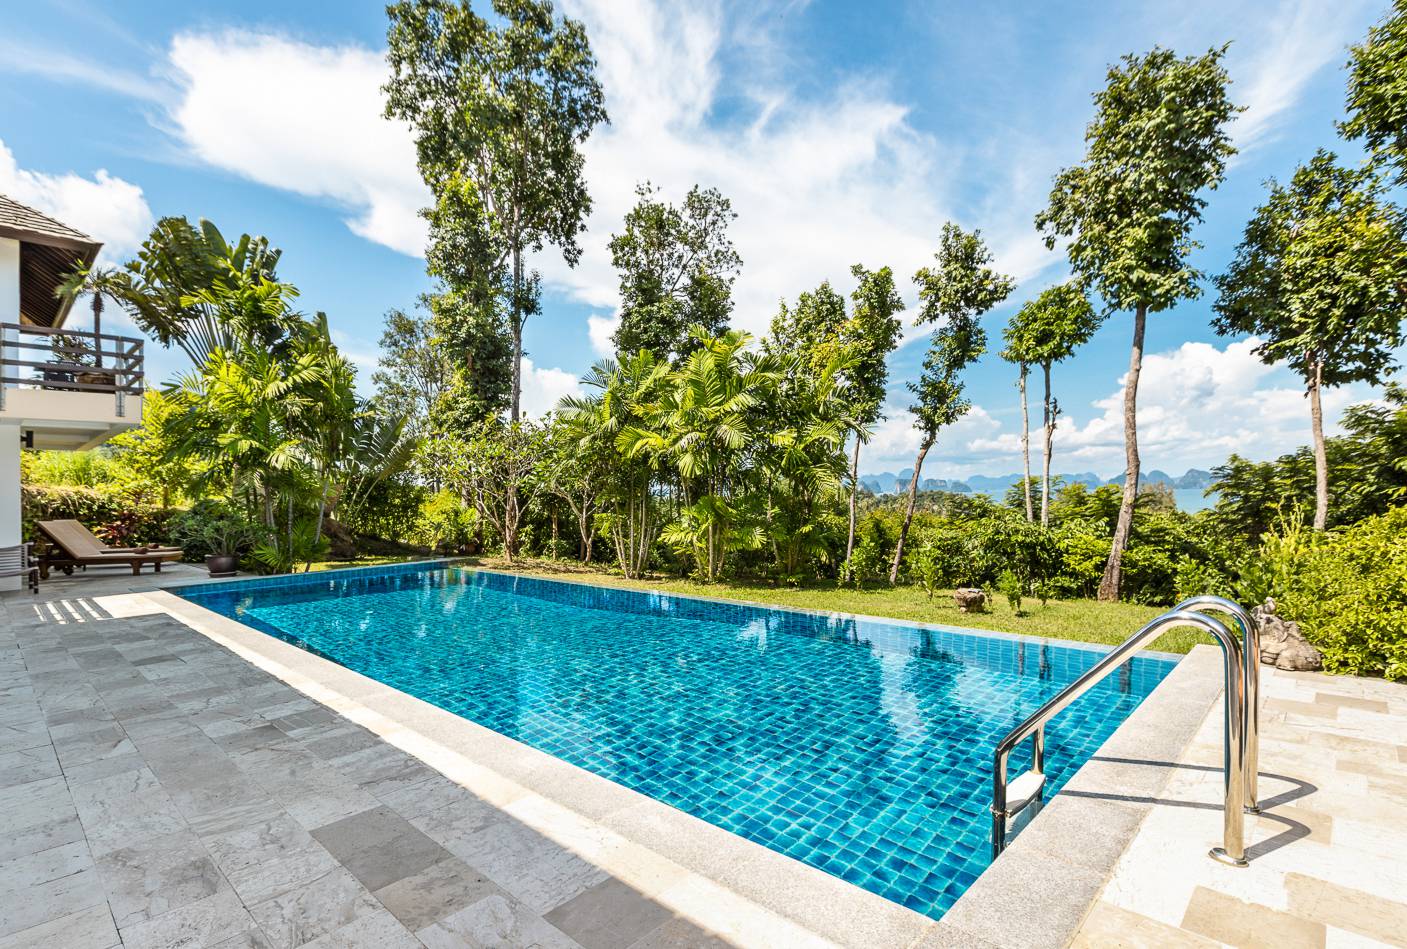 villa cortez private pool and terrace weich